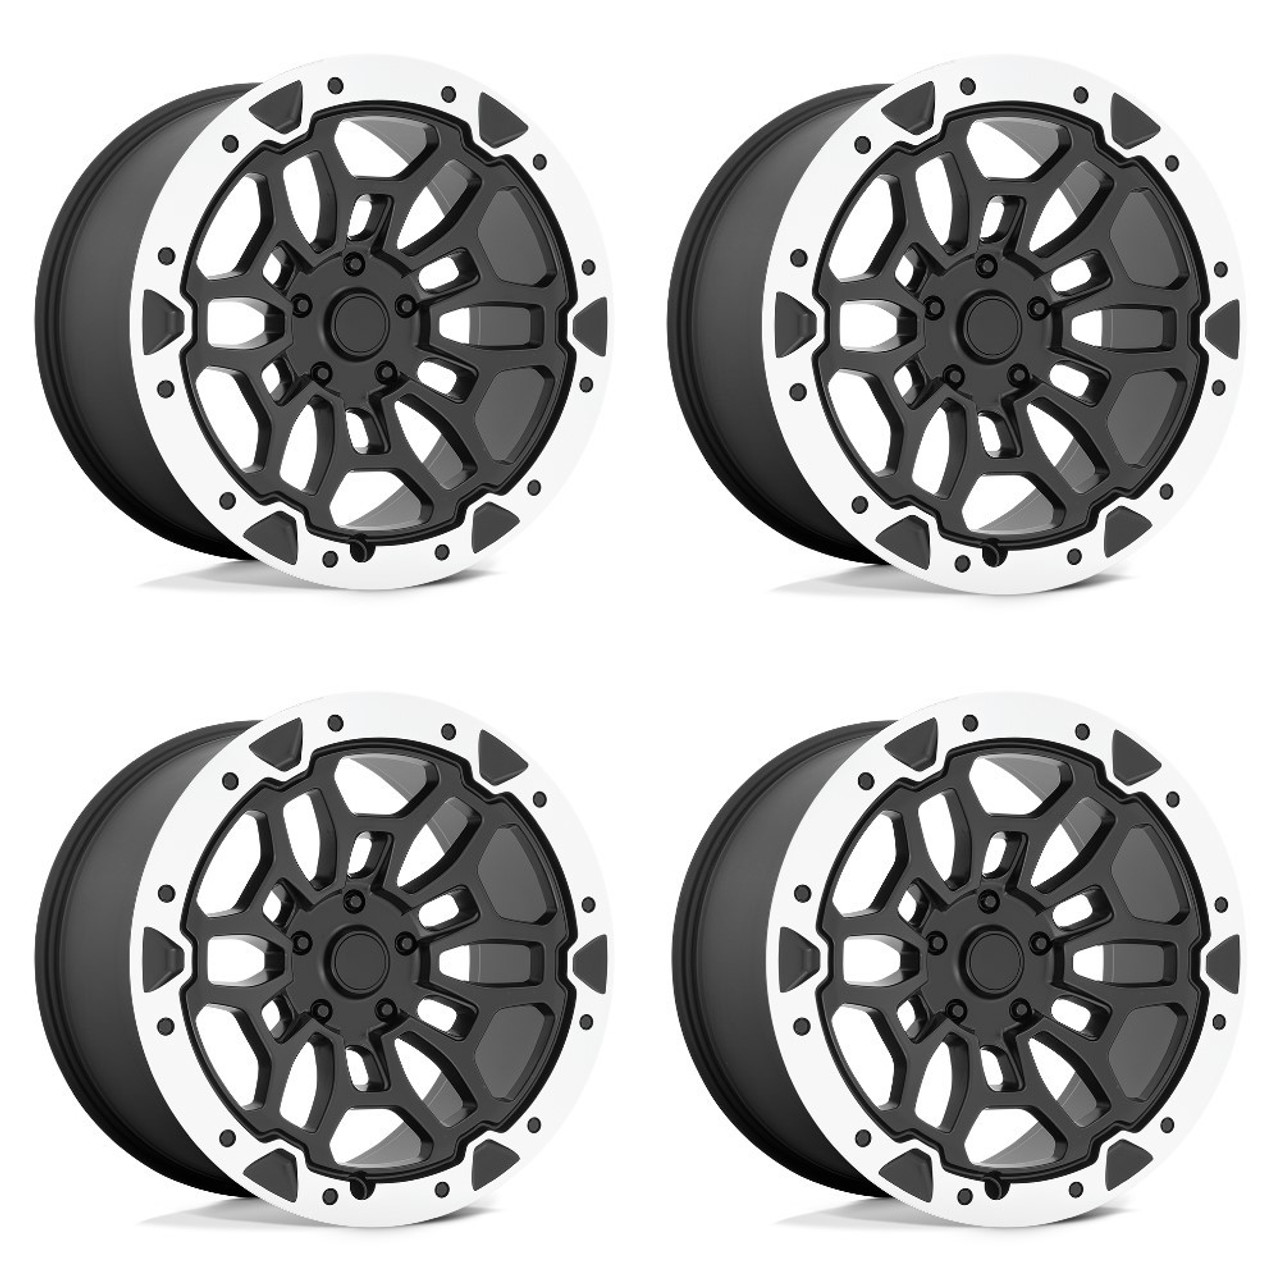 Set 4 Performance Replicas PR215 22x10 5x5.5 Black Machined Wheels 22" 19mm